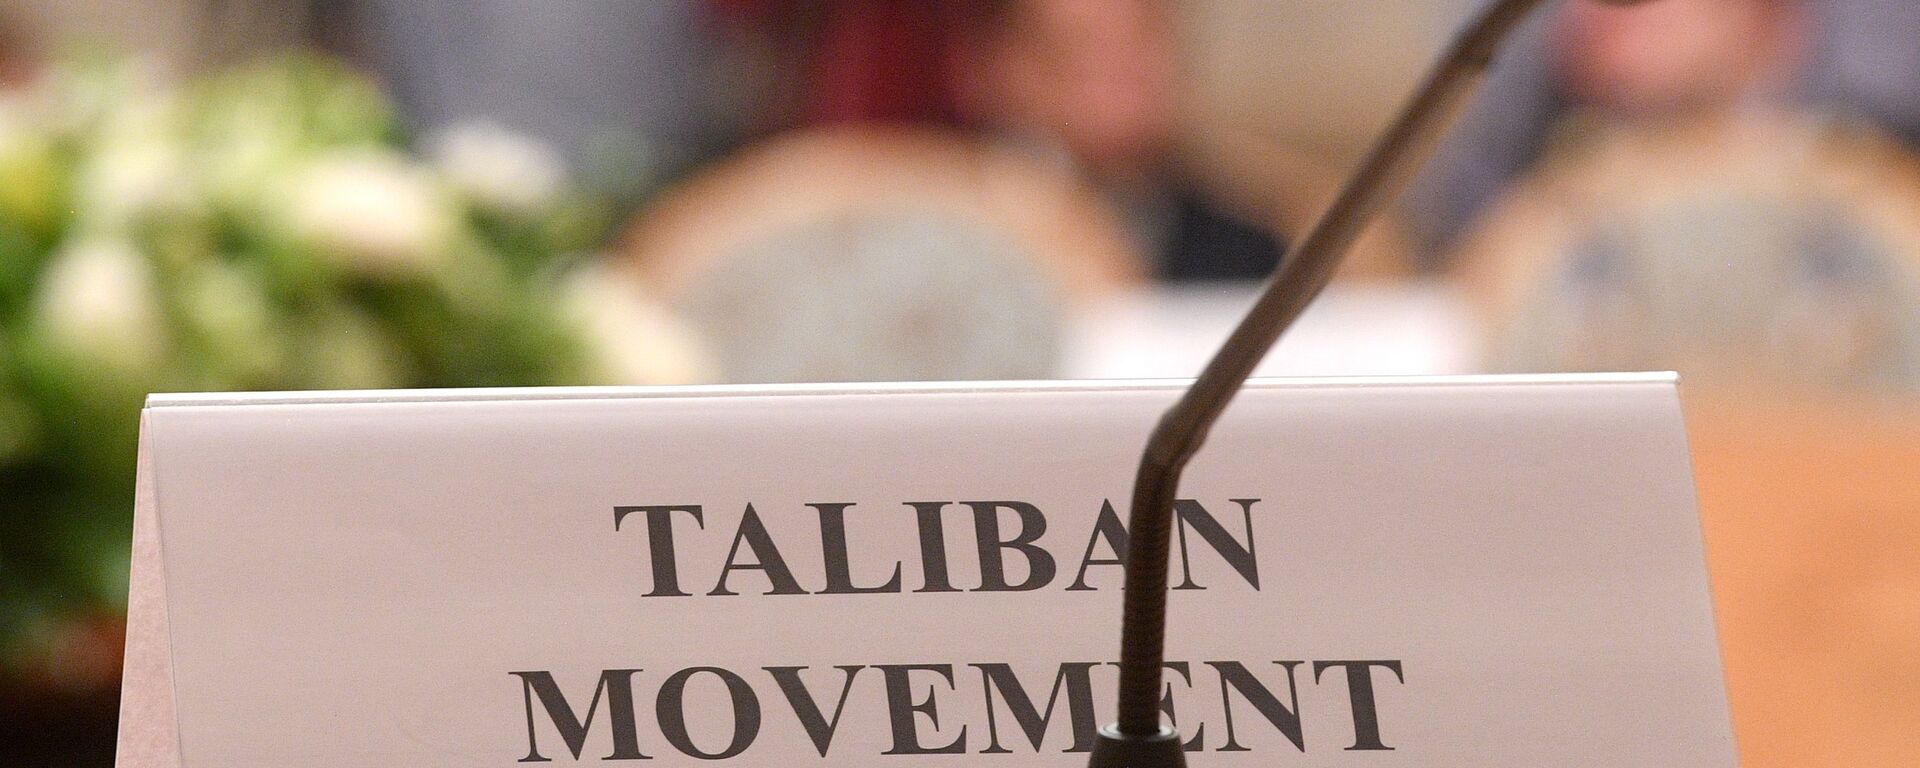 Табличка на столе представителей движения Талибан  - Sputnik Ўзбекистон, 1920, 28.01.2021